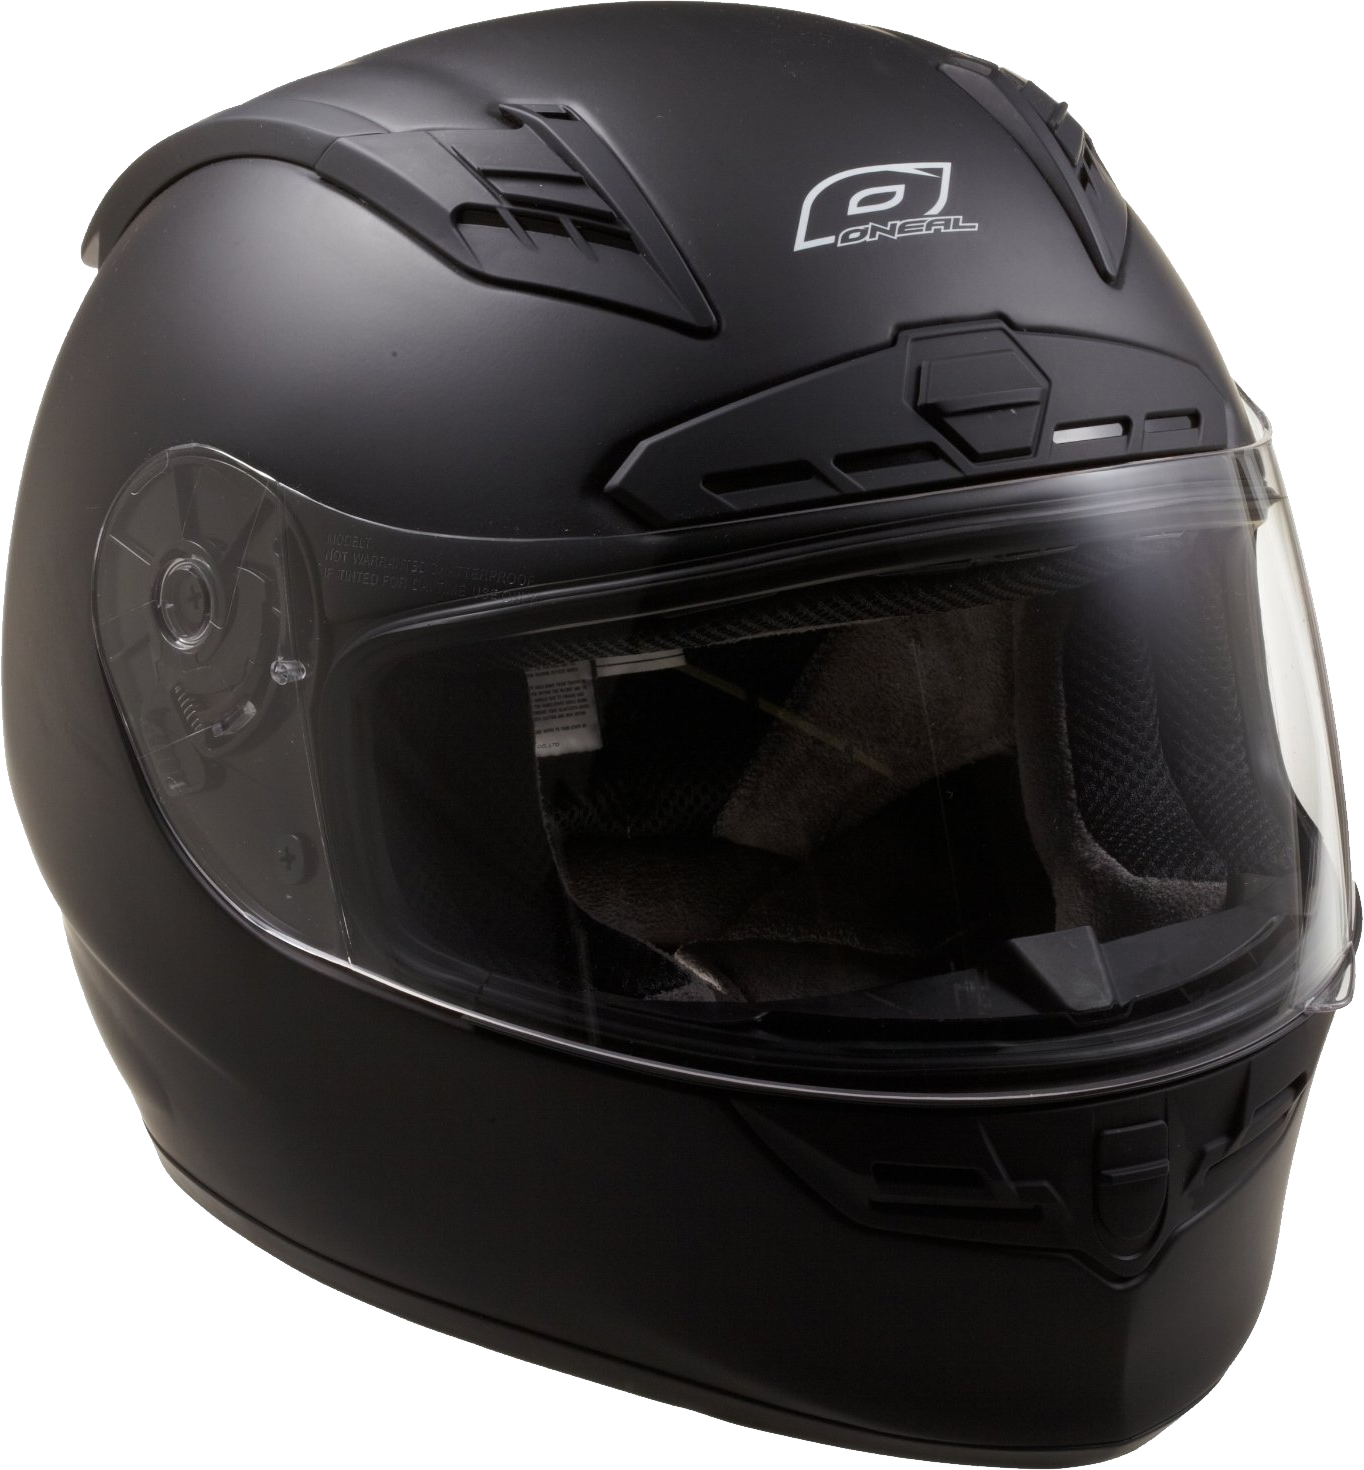 Download PNG image - Motorcycle Helmet PNG Free Image 